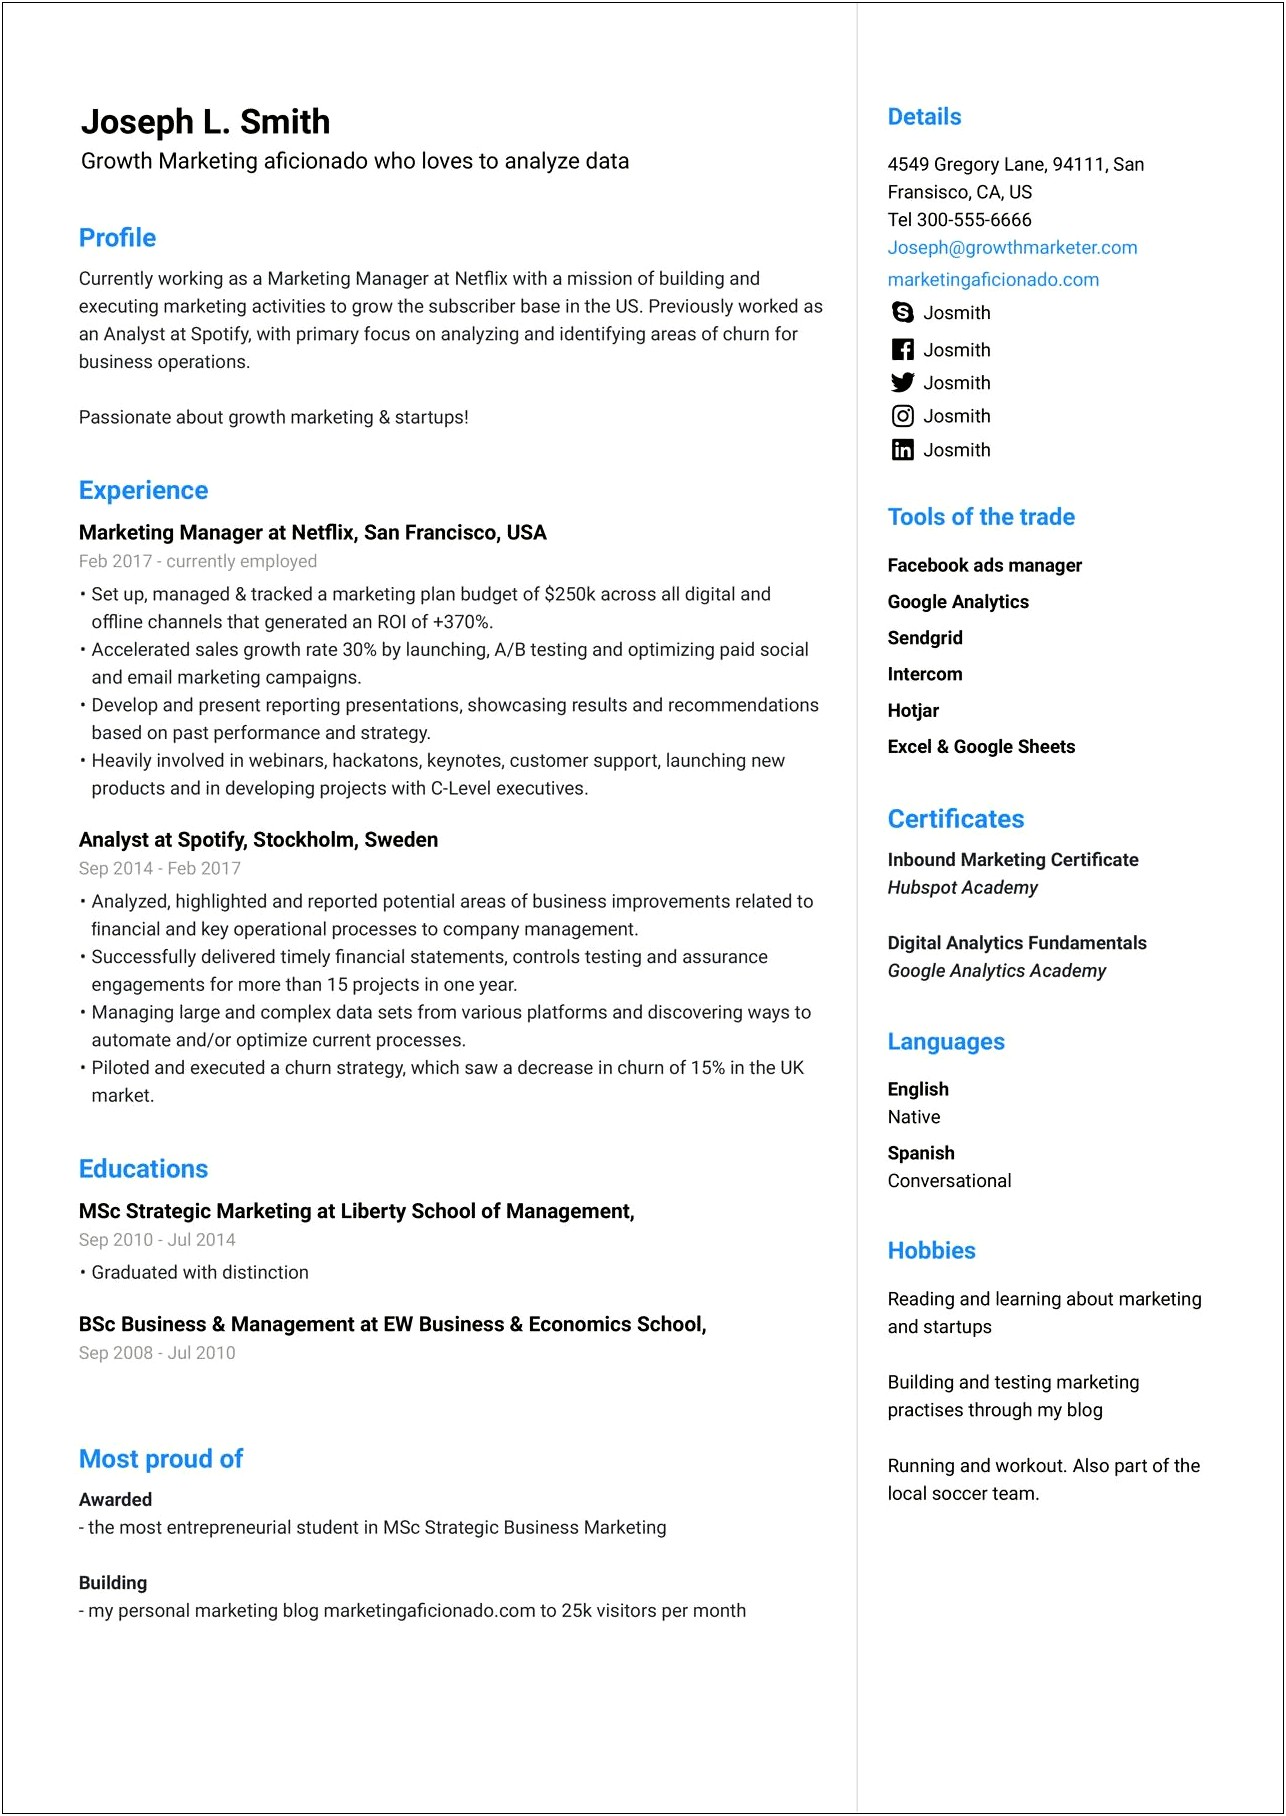 Sample Resume Job Description For Advertising Manager